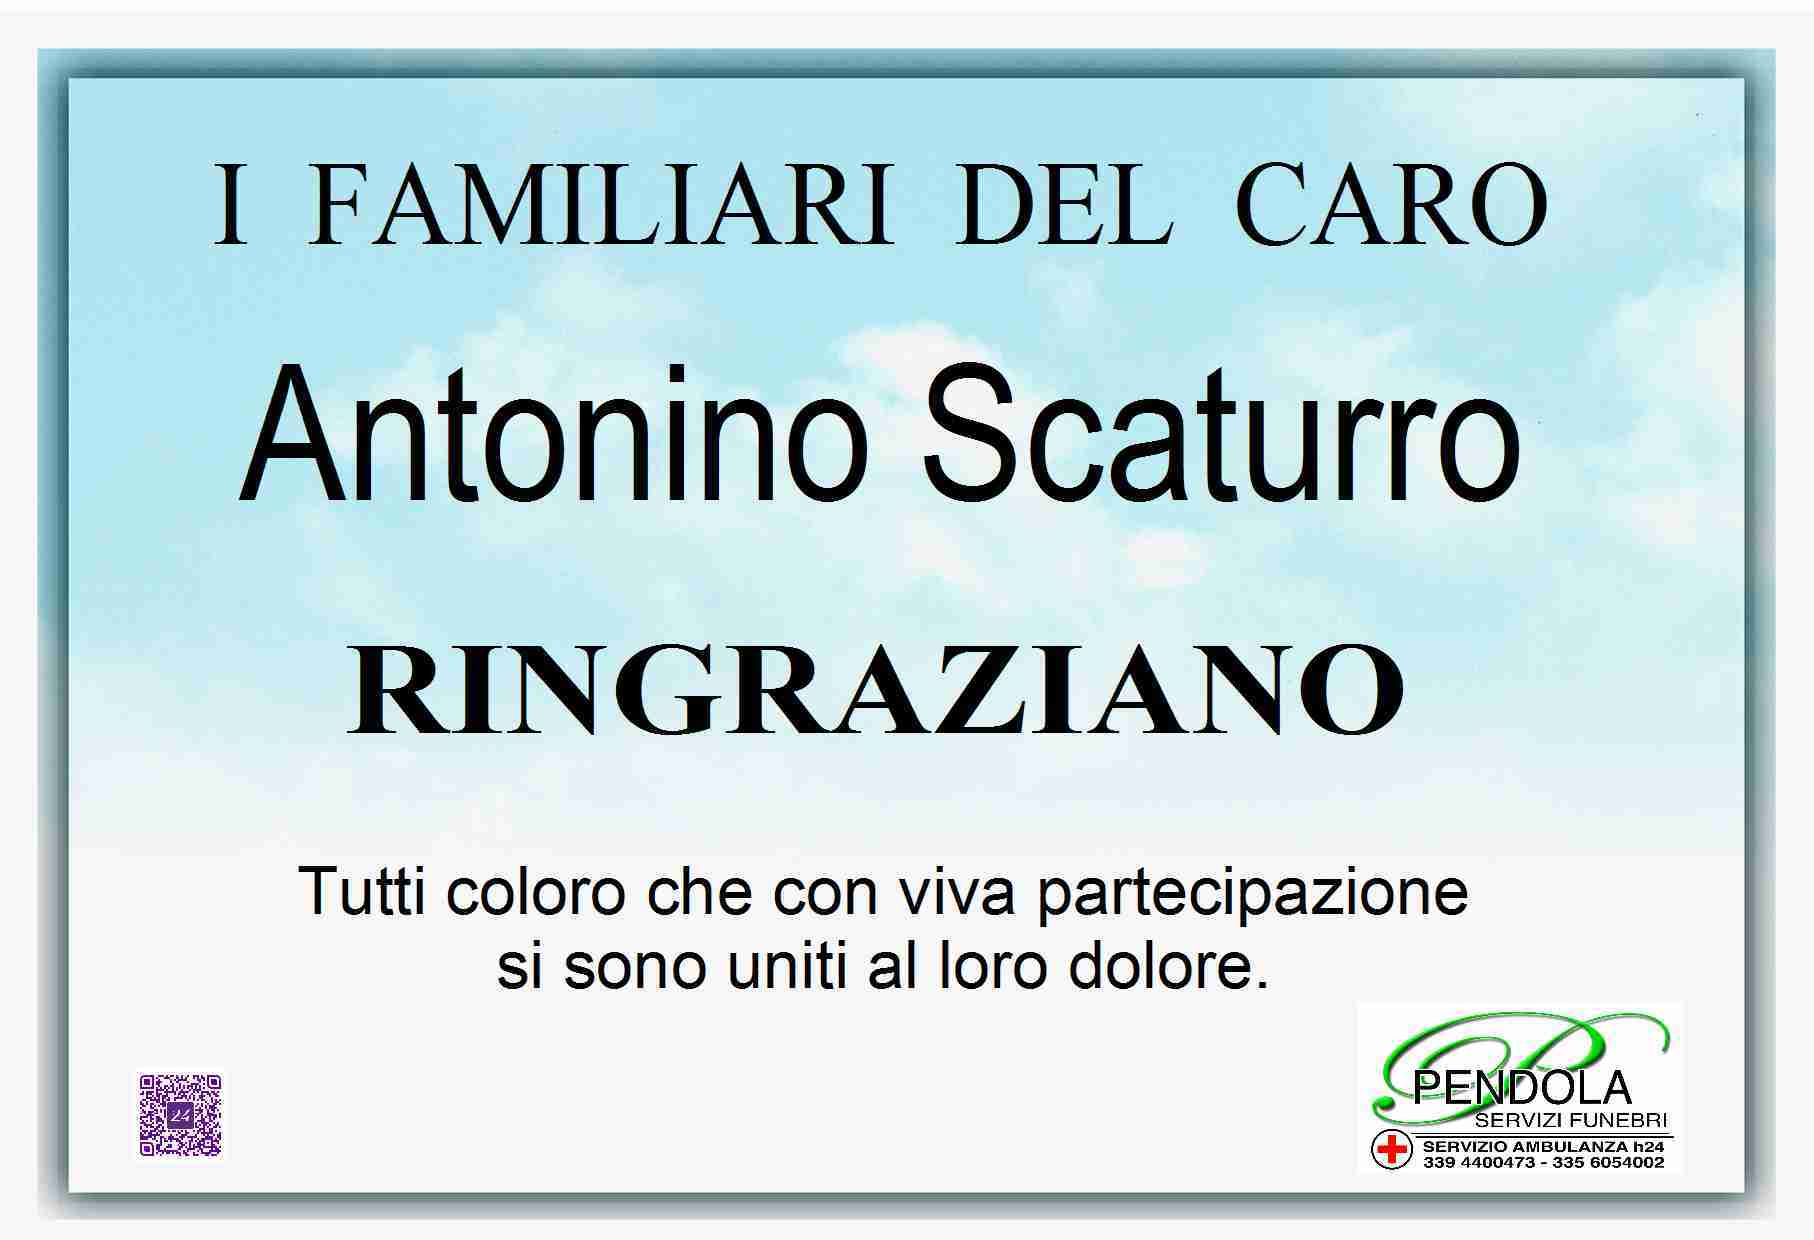 Antonino Scaturro